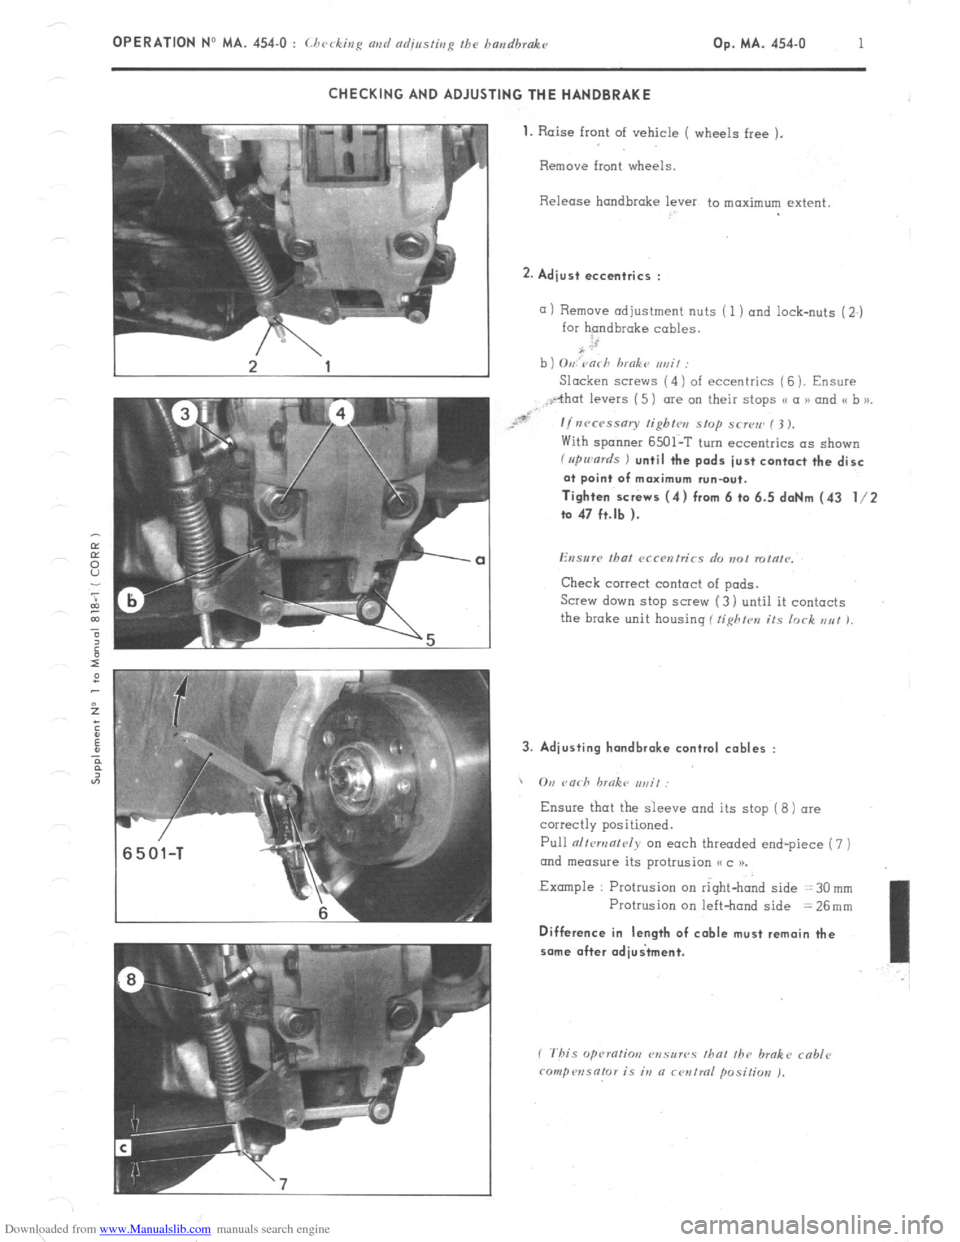 Citroen CX 1981 1.G Workshop Manual Downloaded from www.Manualslib.com manuals search engine OPERATION No MA. 454-O : Lhcckiu~ avd adjnsfbrR fhe bandbrake op. MA. 454-u I CHECKING AND ADJUSTING THE HANDBRAKE 
1. 
Raise front of vehicle 